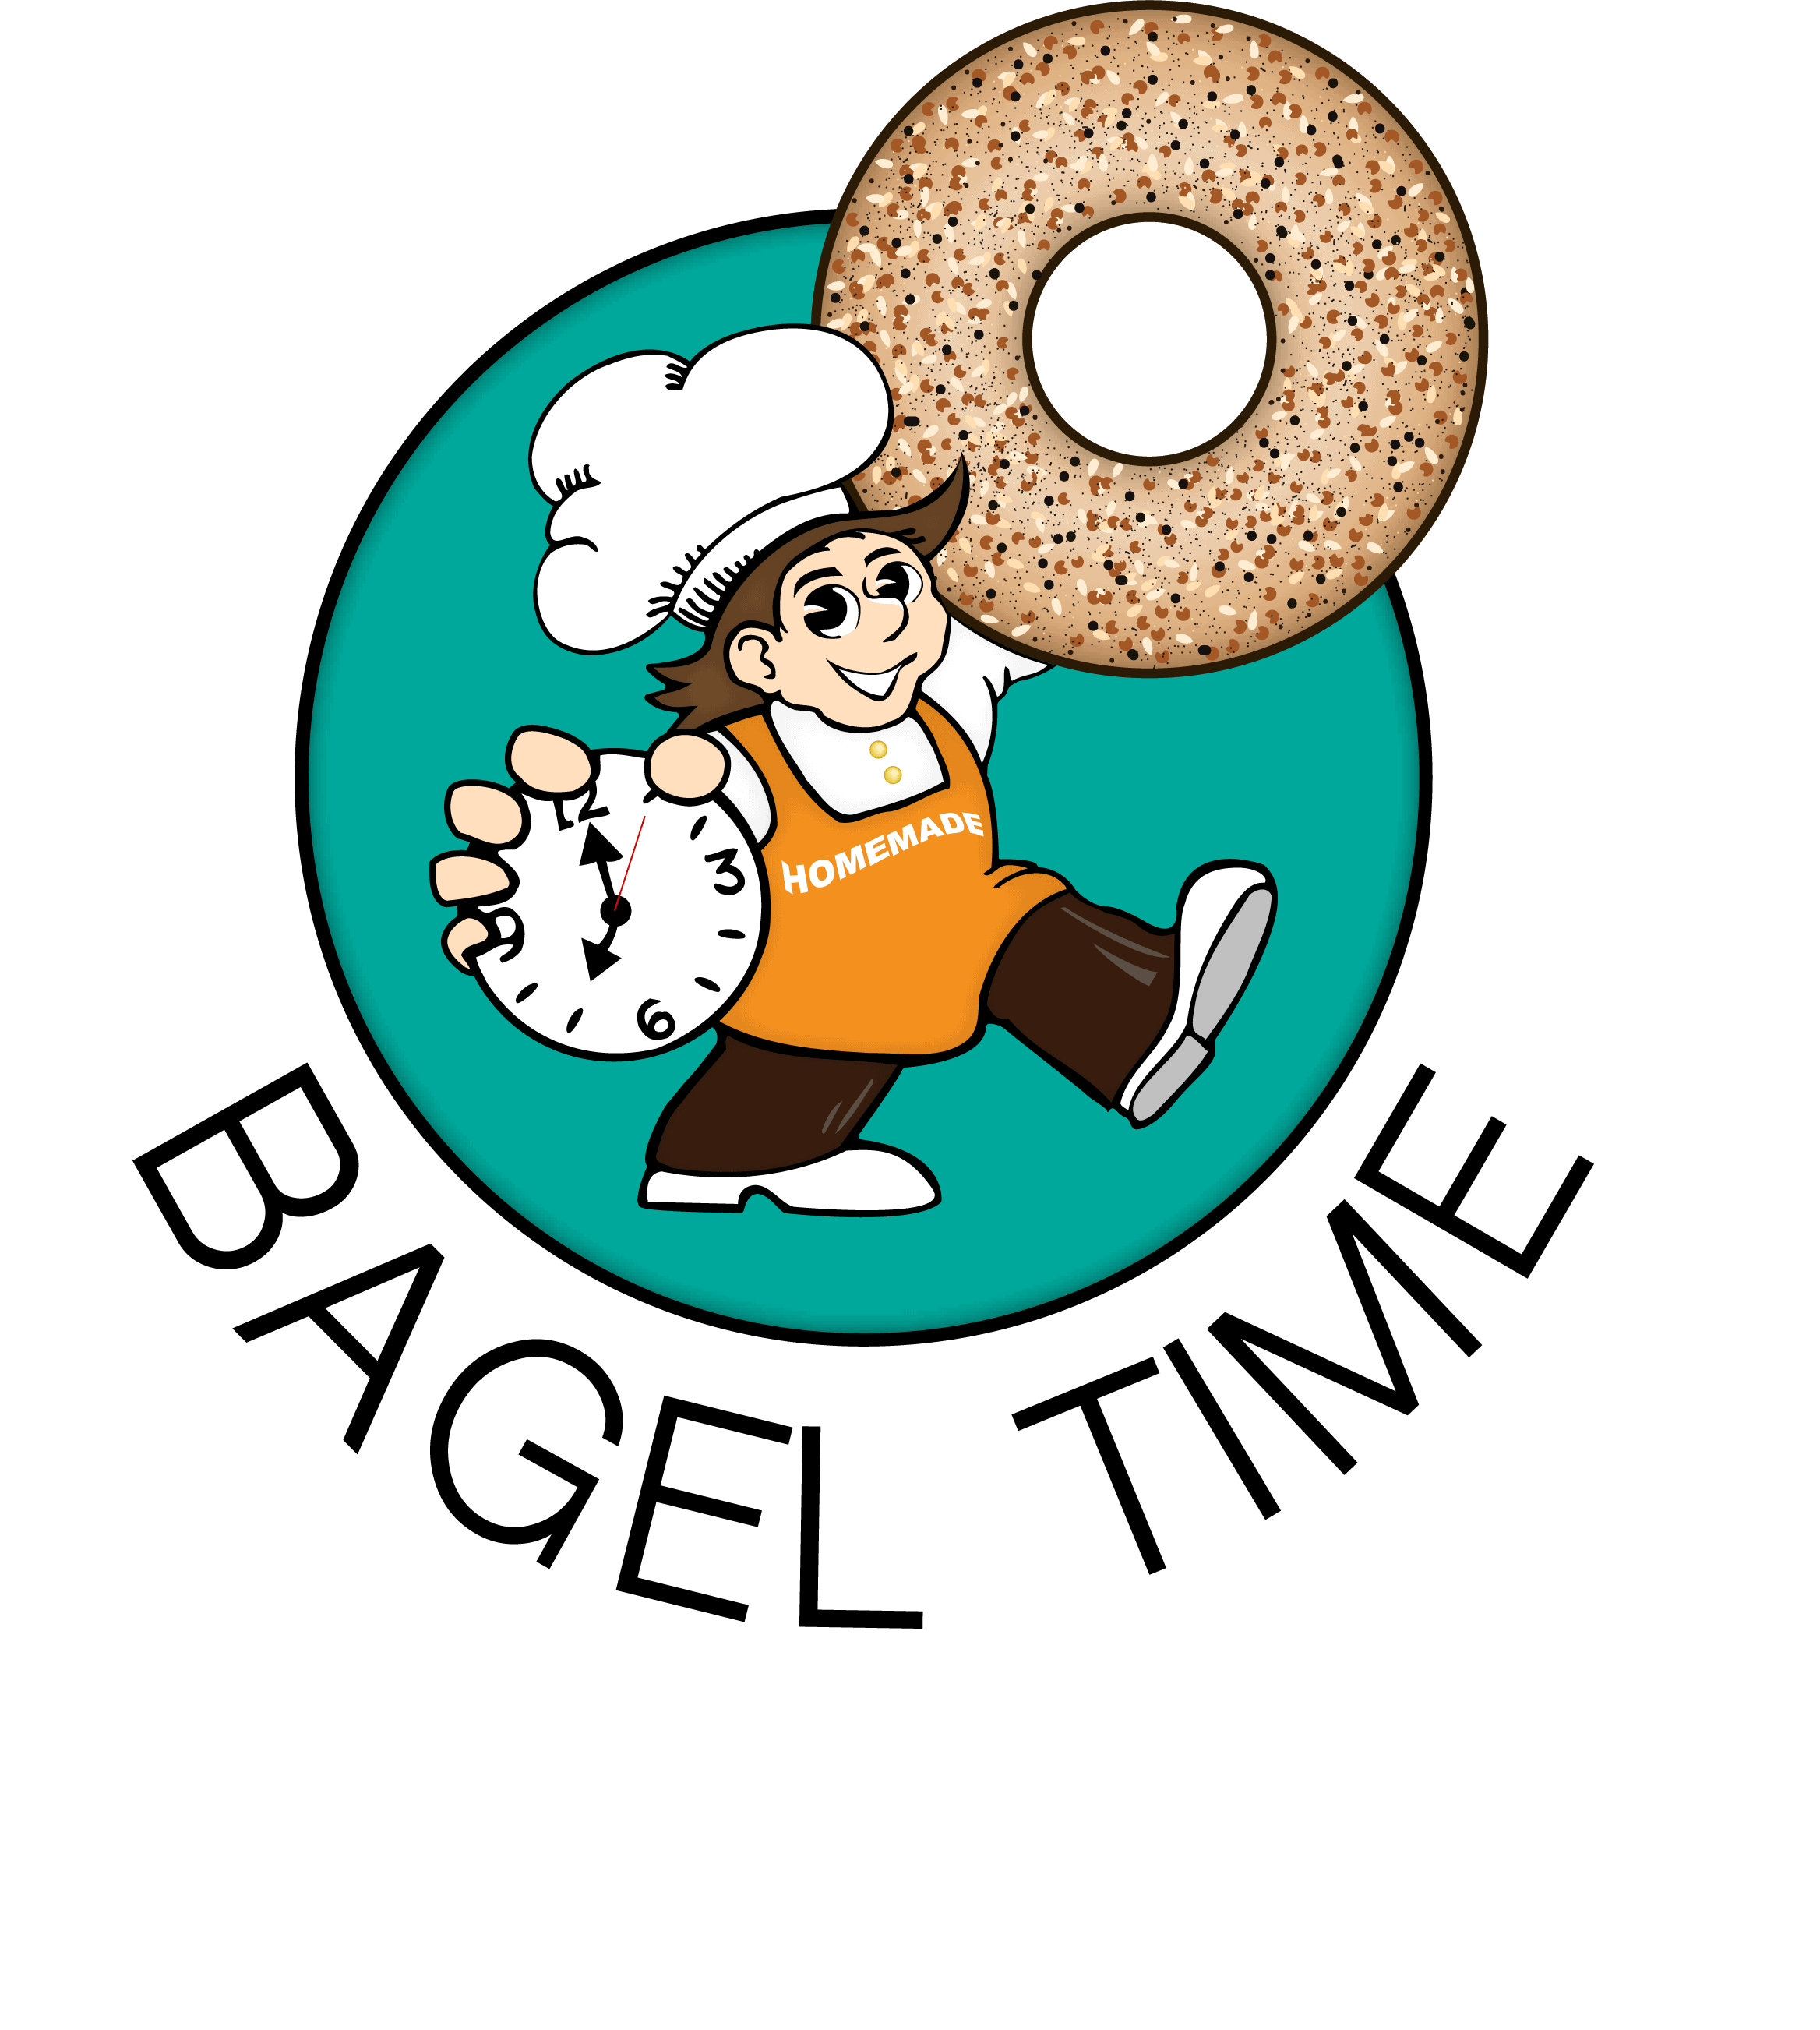 Bagel Time